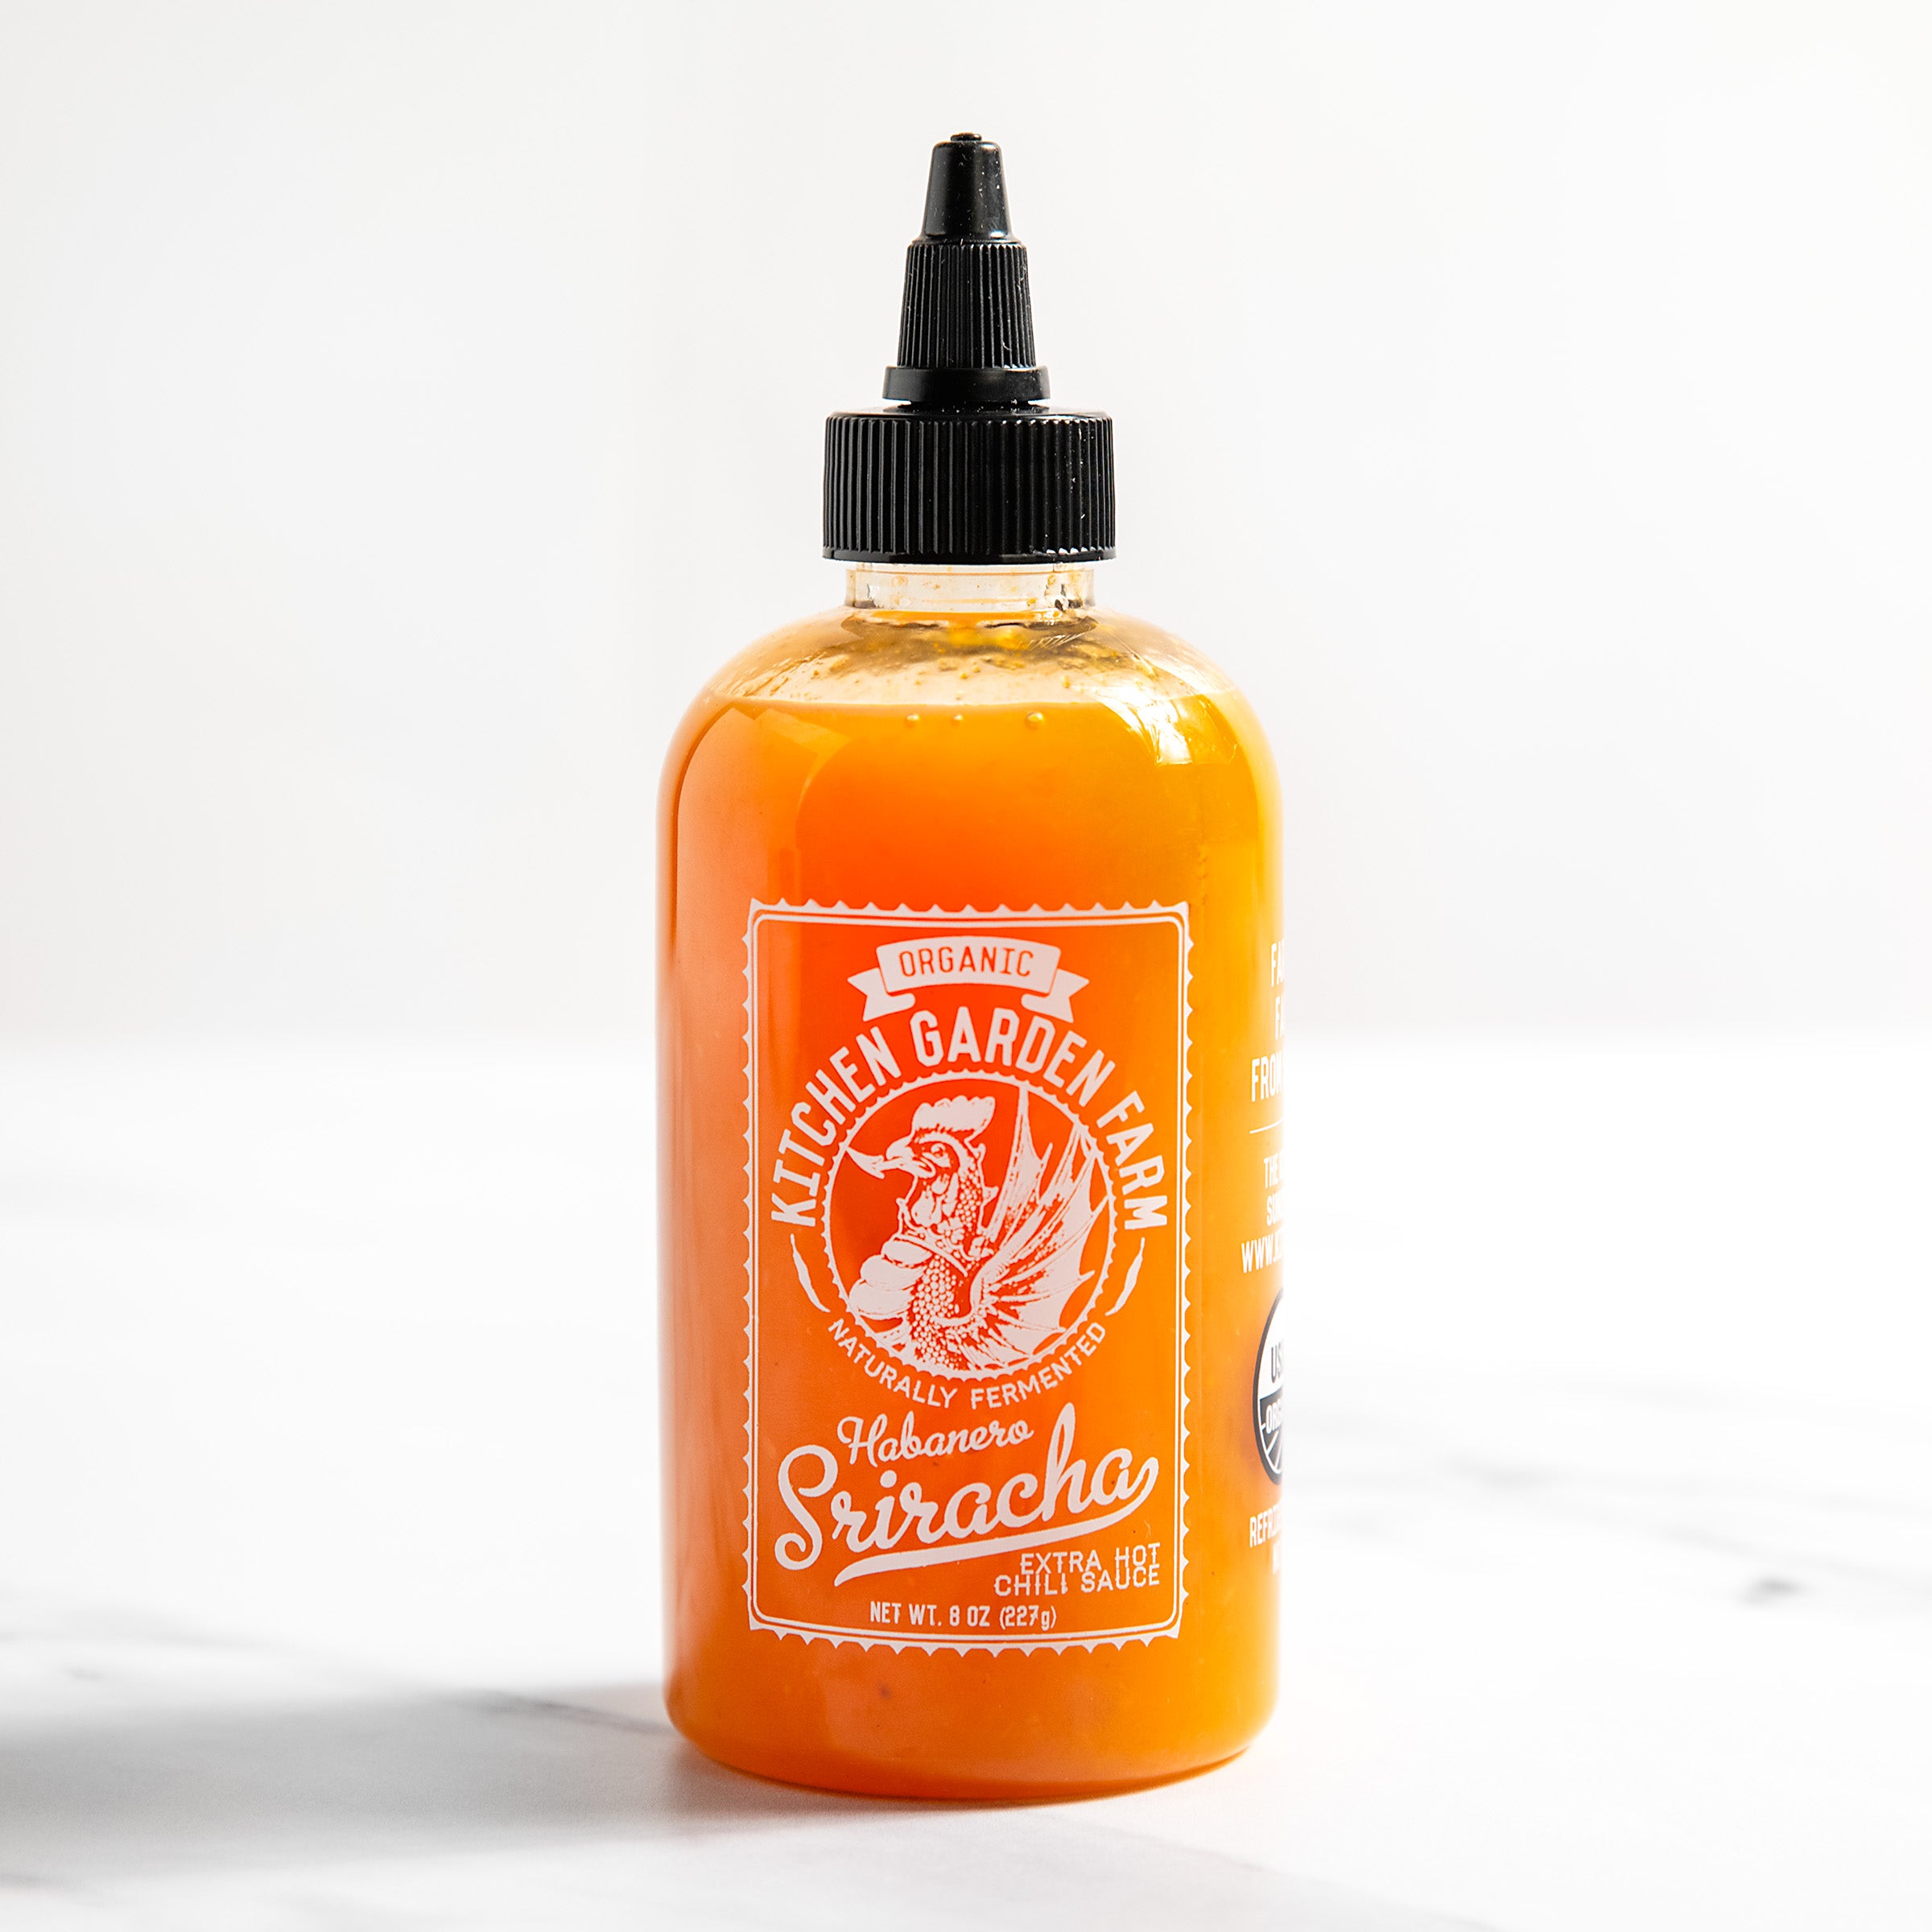 igourmet_15793_Organic Habanero Sriracha Chili Sauce_kitchen garden farm_sauces & marinades